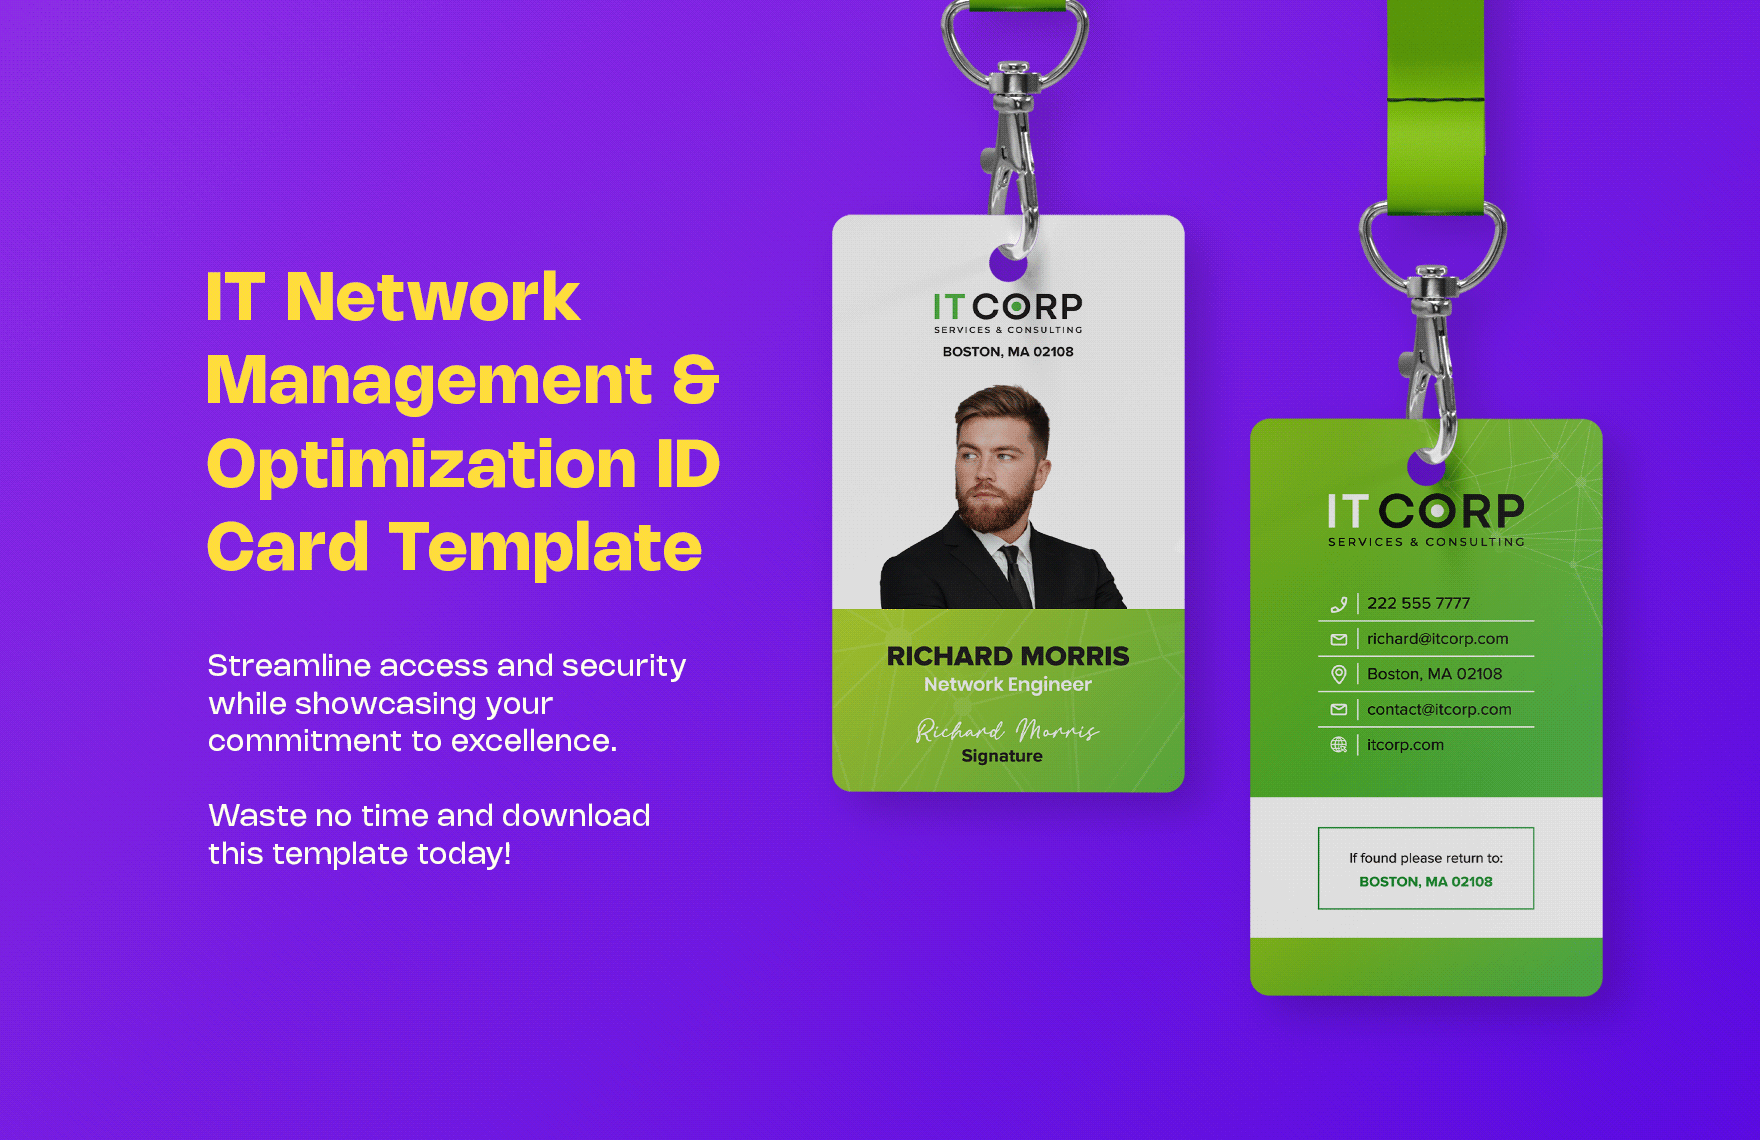 IT Network Management & Optimization ID Card Template